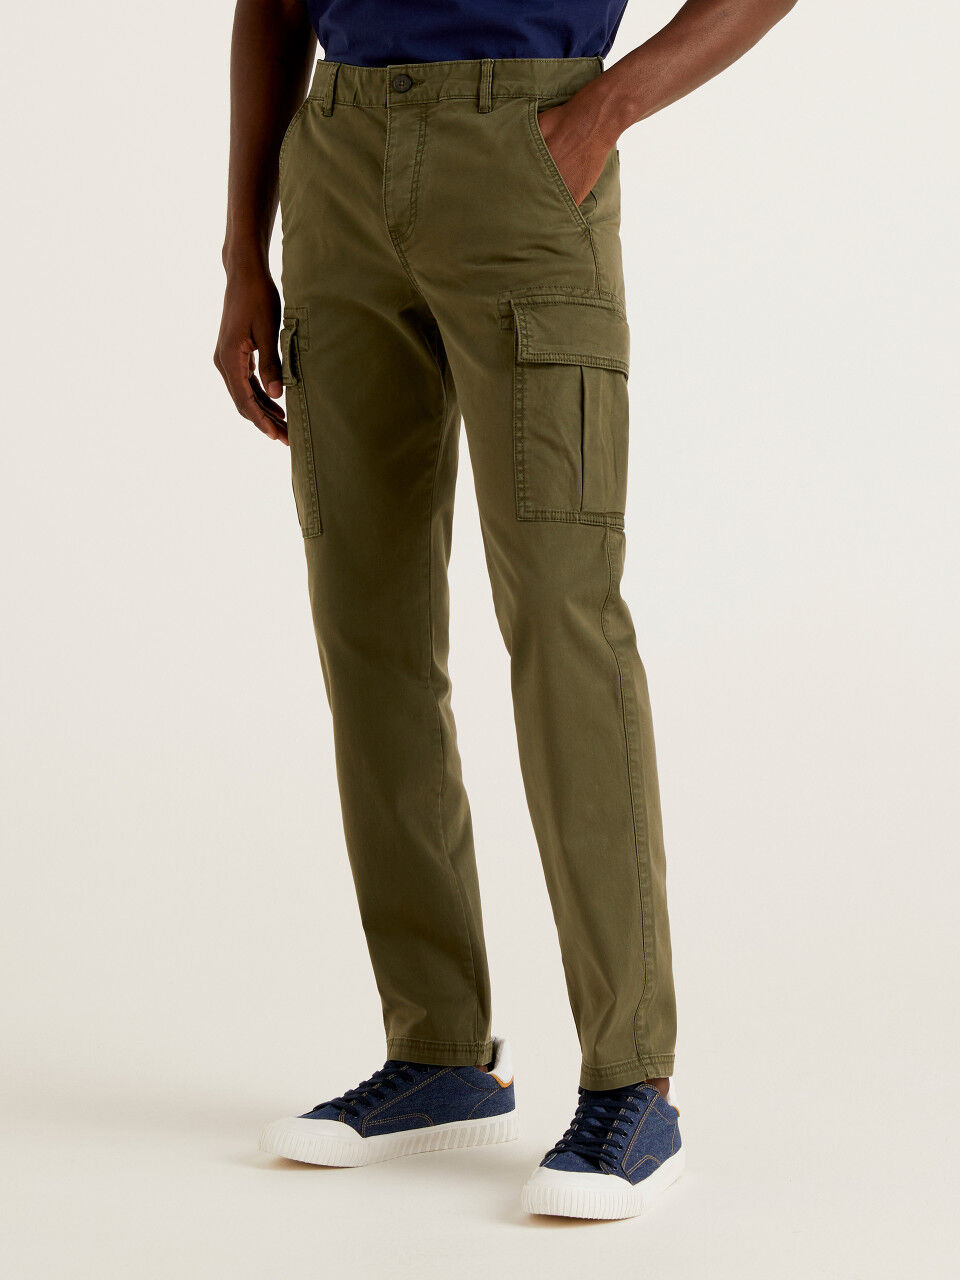 United Colors of Benetton Pantalones para Hombre 